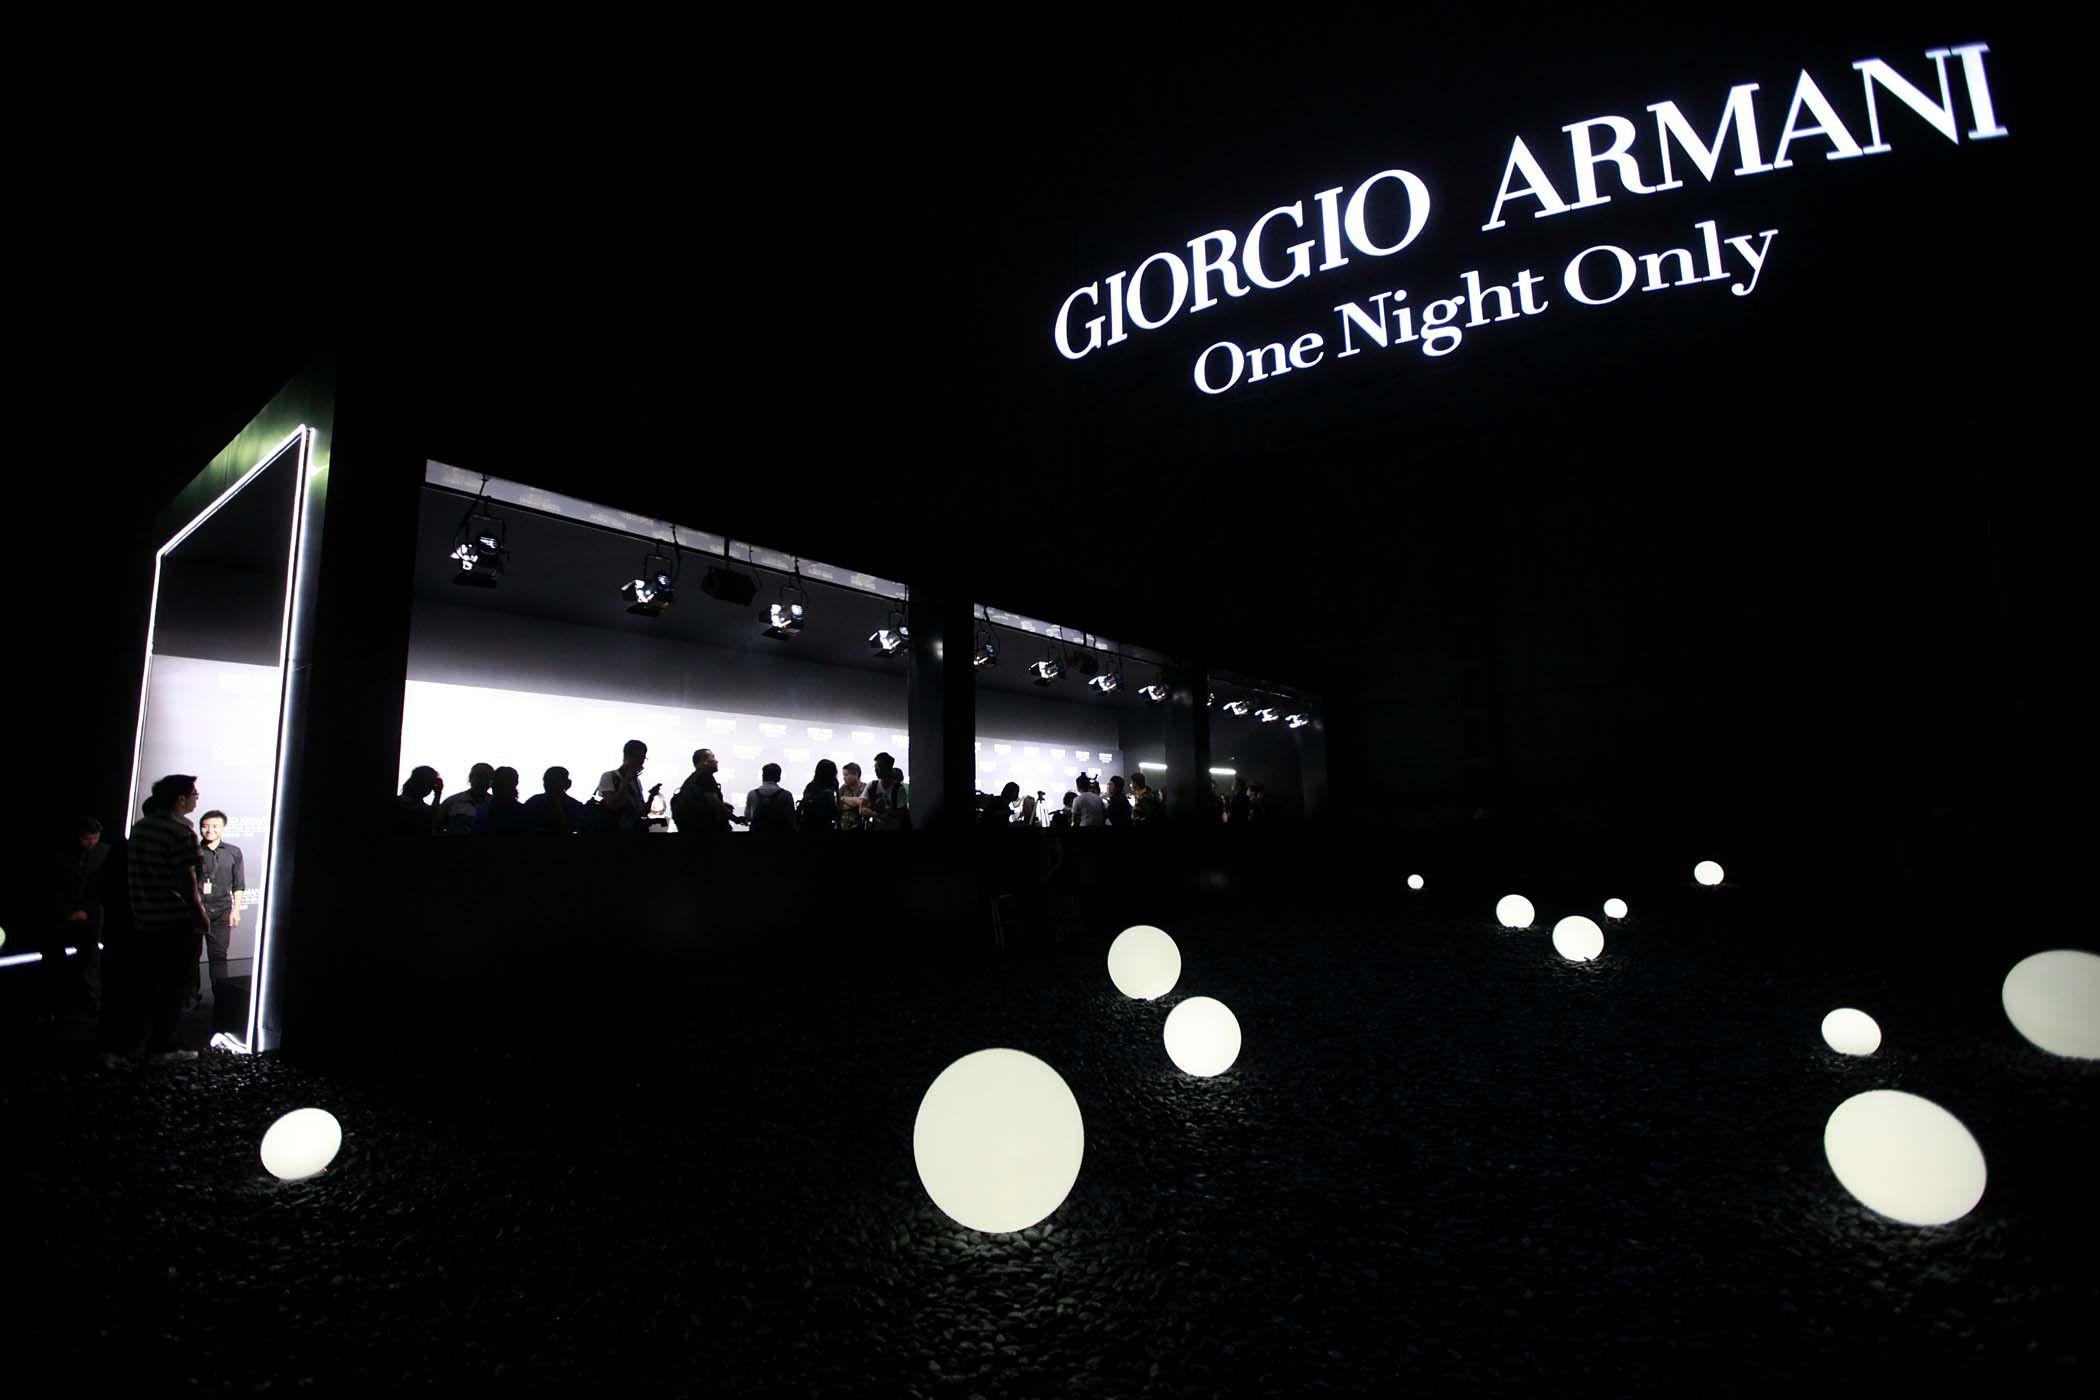 Giorgio Armani clothing sale wallpapers and image